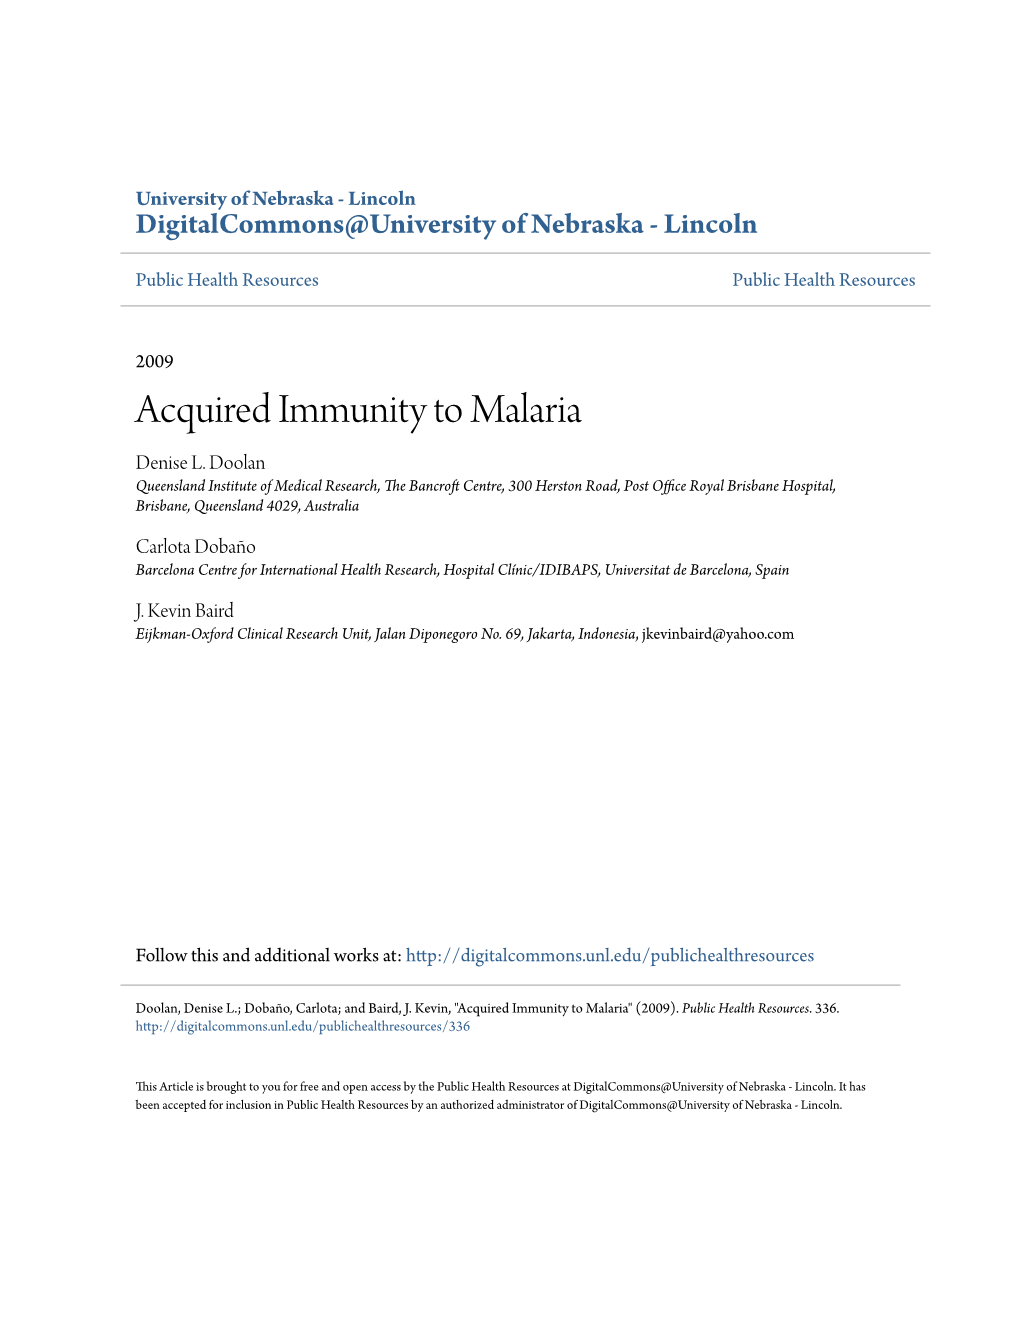 Acquired Immunity to Malaria Denise L